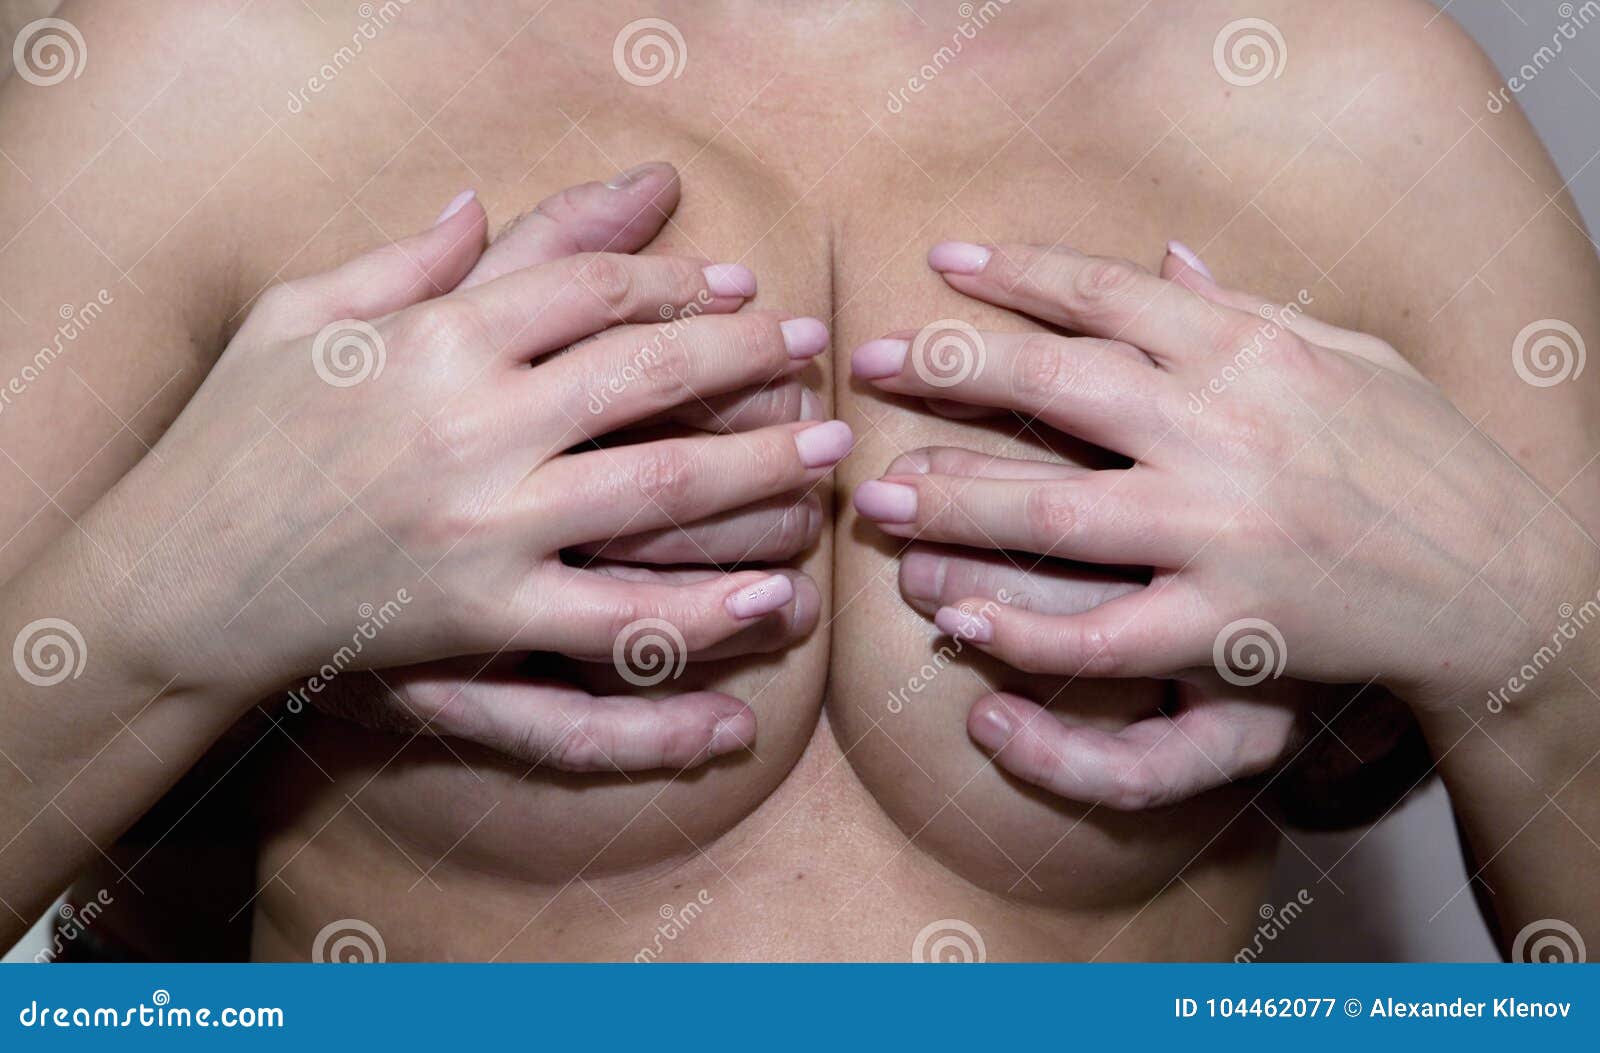 сжал грудь жены фото 27